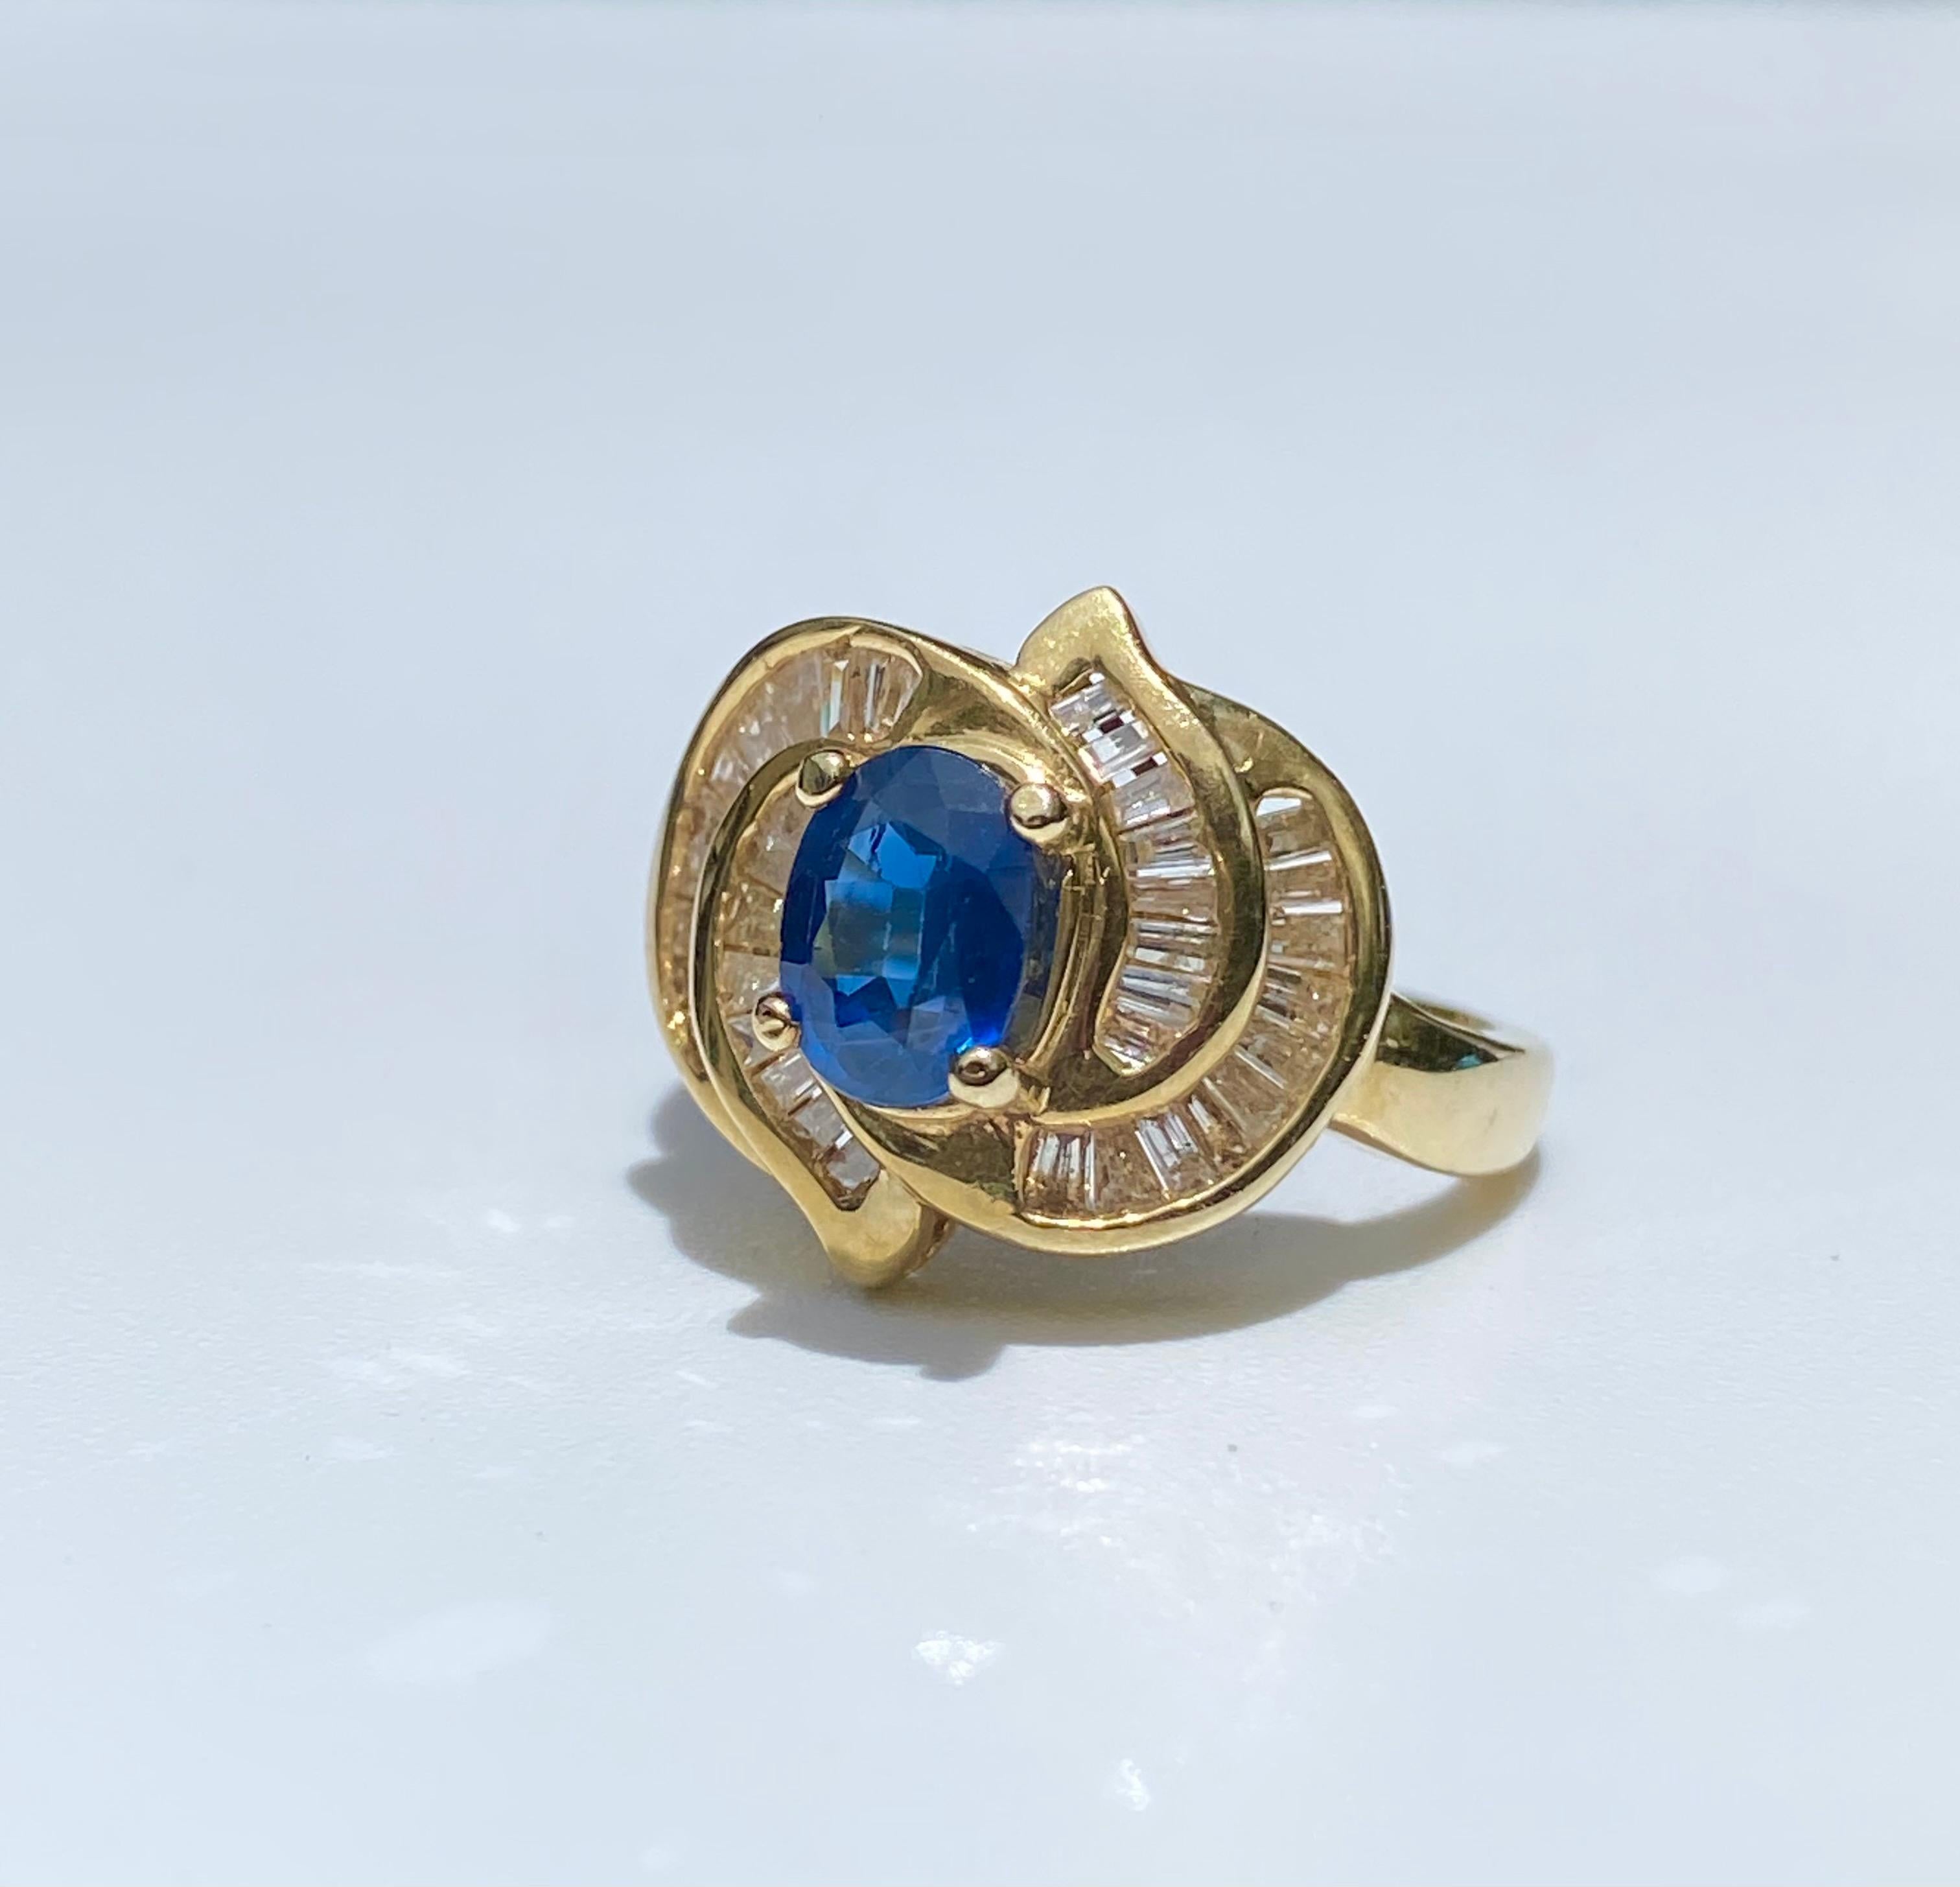 Centering a 0.89 Carat Oval-Cut Ceylon (Sri Lanka) Blue Sapphire, accented by Baguette-Cut Diamonds, and set in 14K Yellow Gold. 

Details:
✔ Center Stone: Blue Sapphire
✔ Sapphire Weight: 0.89 carats
✔ Sapphire Origin: Thailand 
✔ Sapphire Cut: